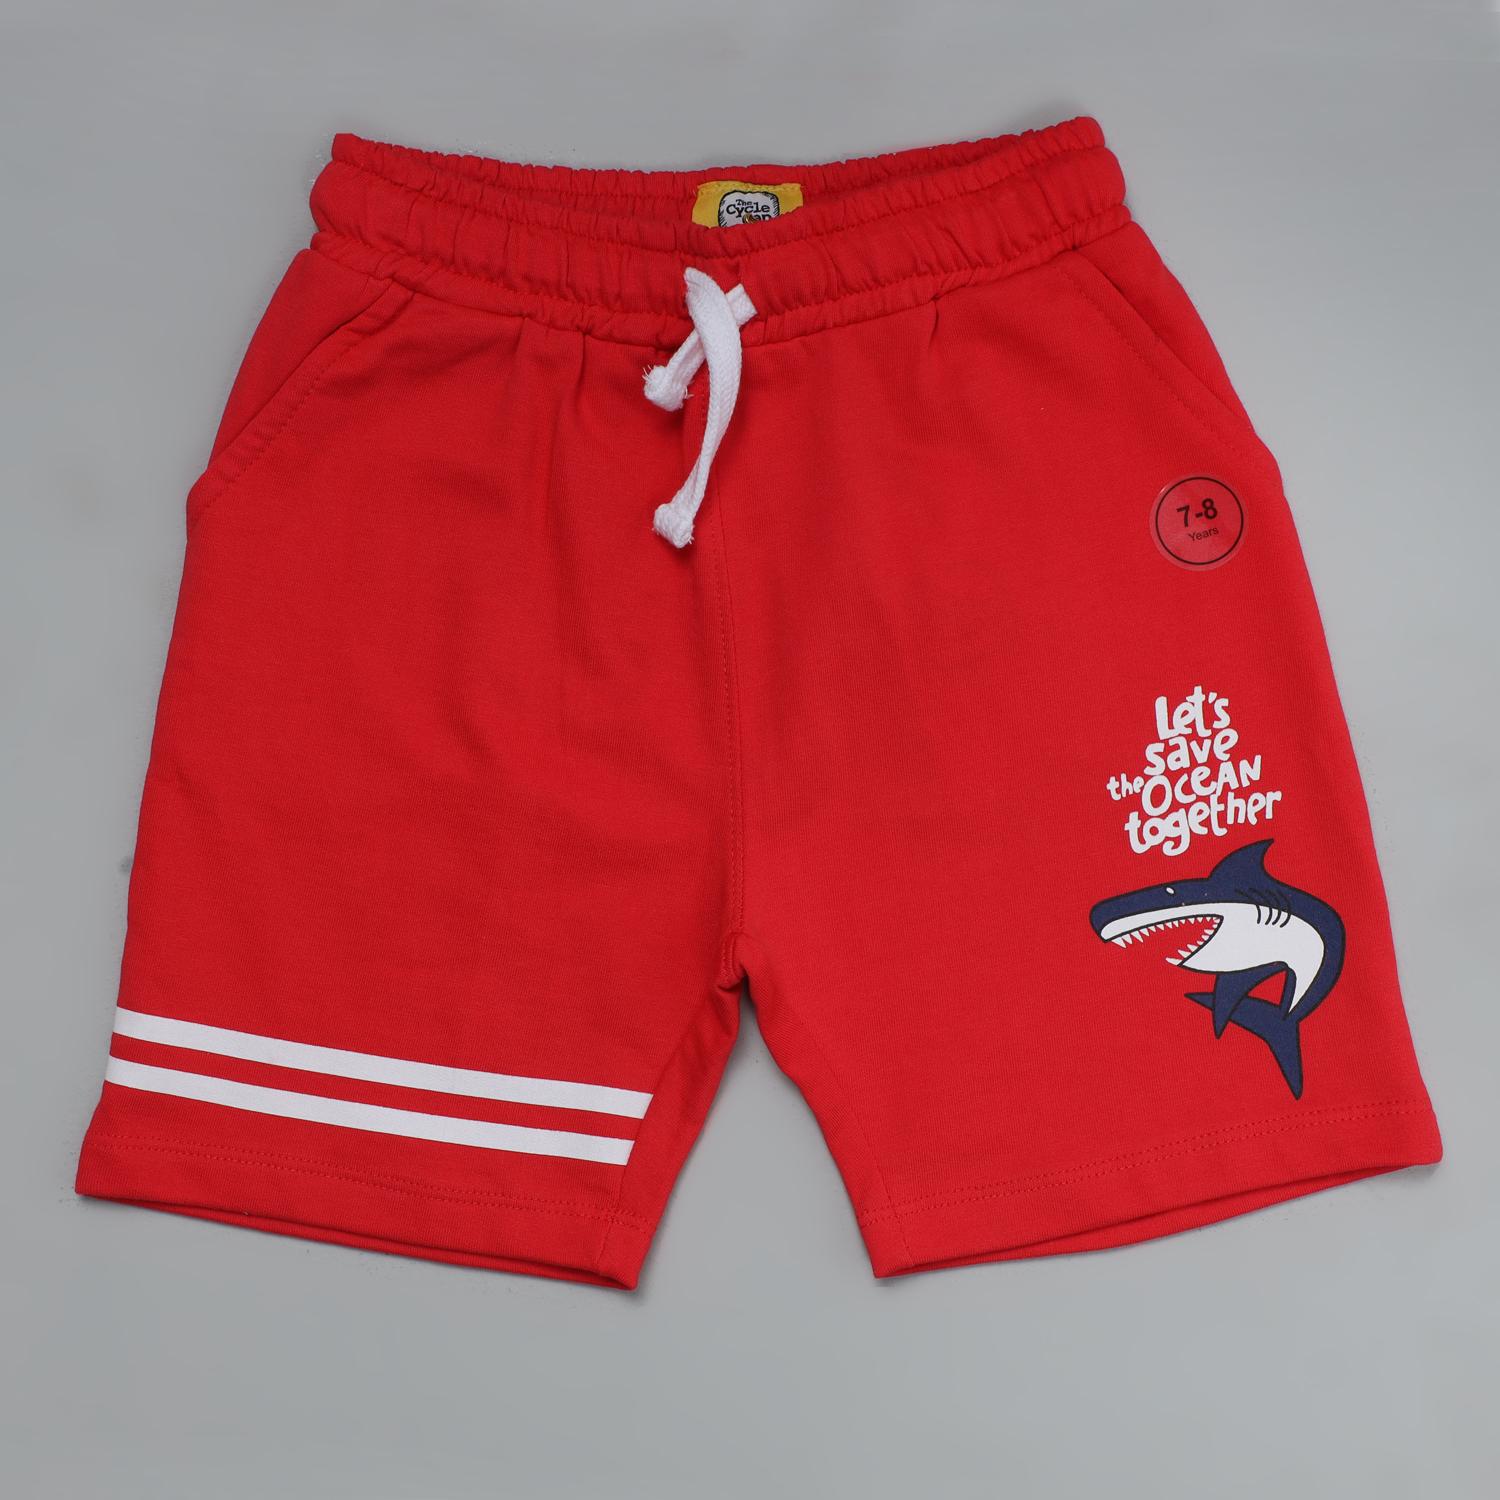 Clothing Boys Pattern Shorts-Red